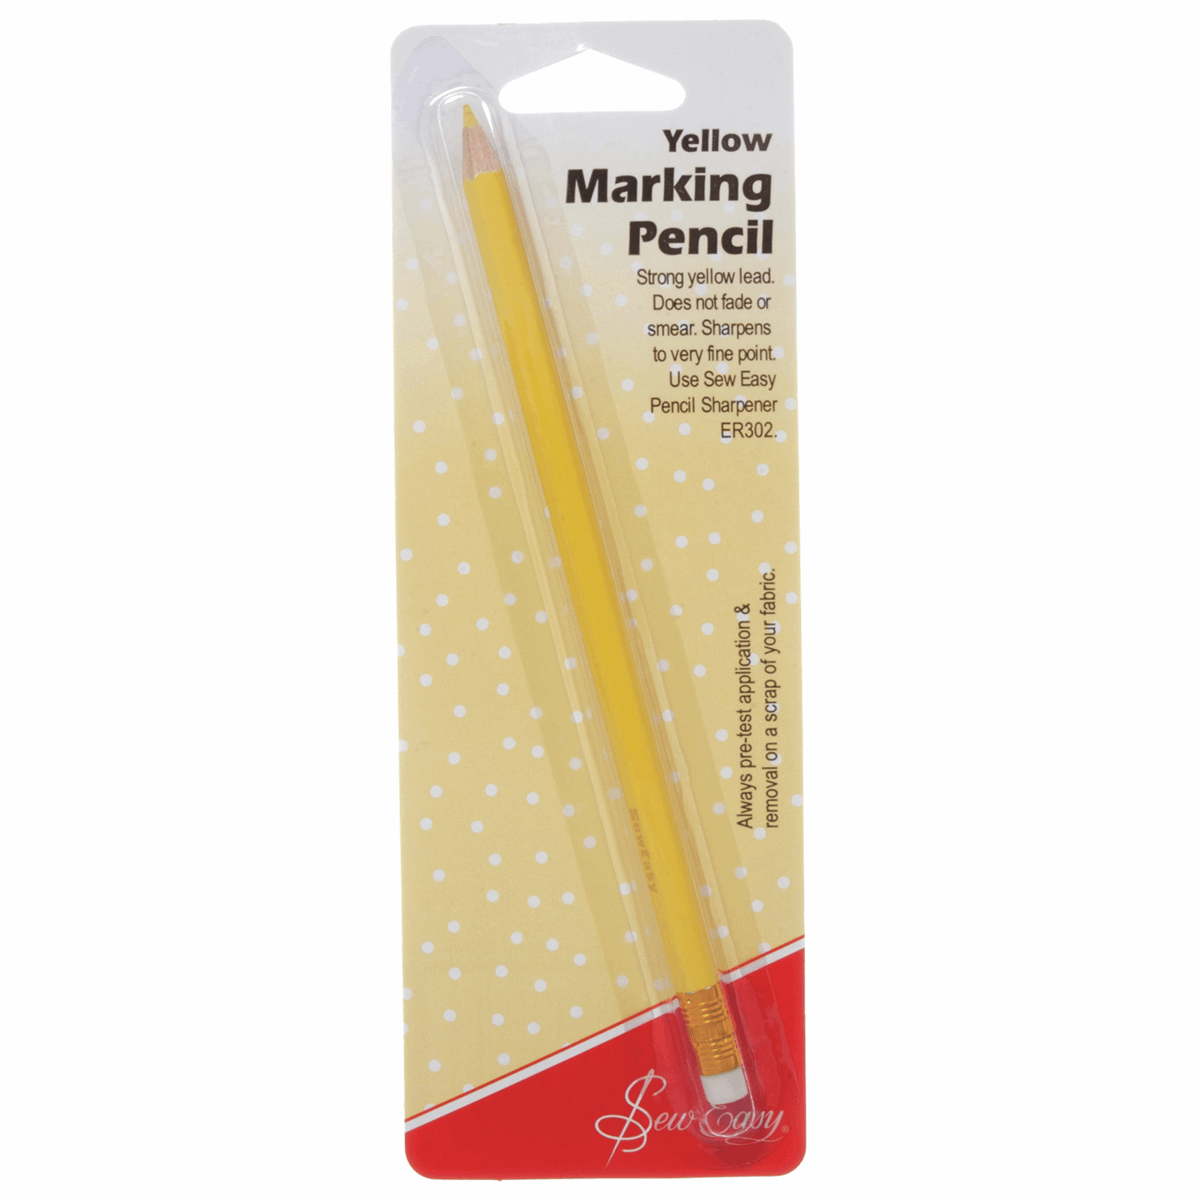 Sew Easy Yellow Marking Pencil